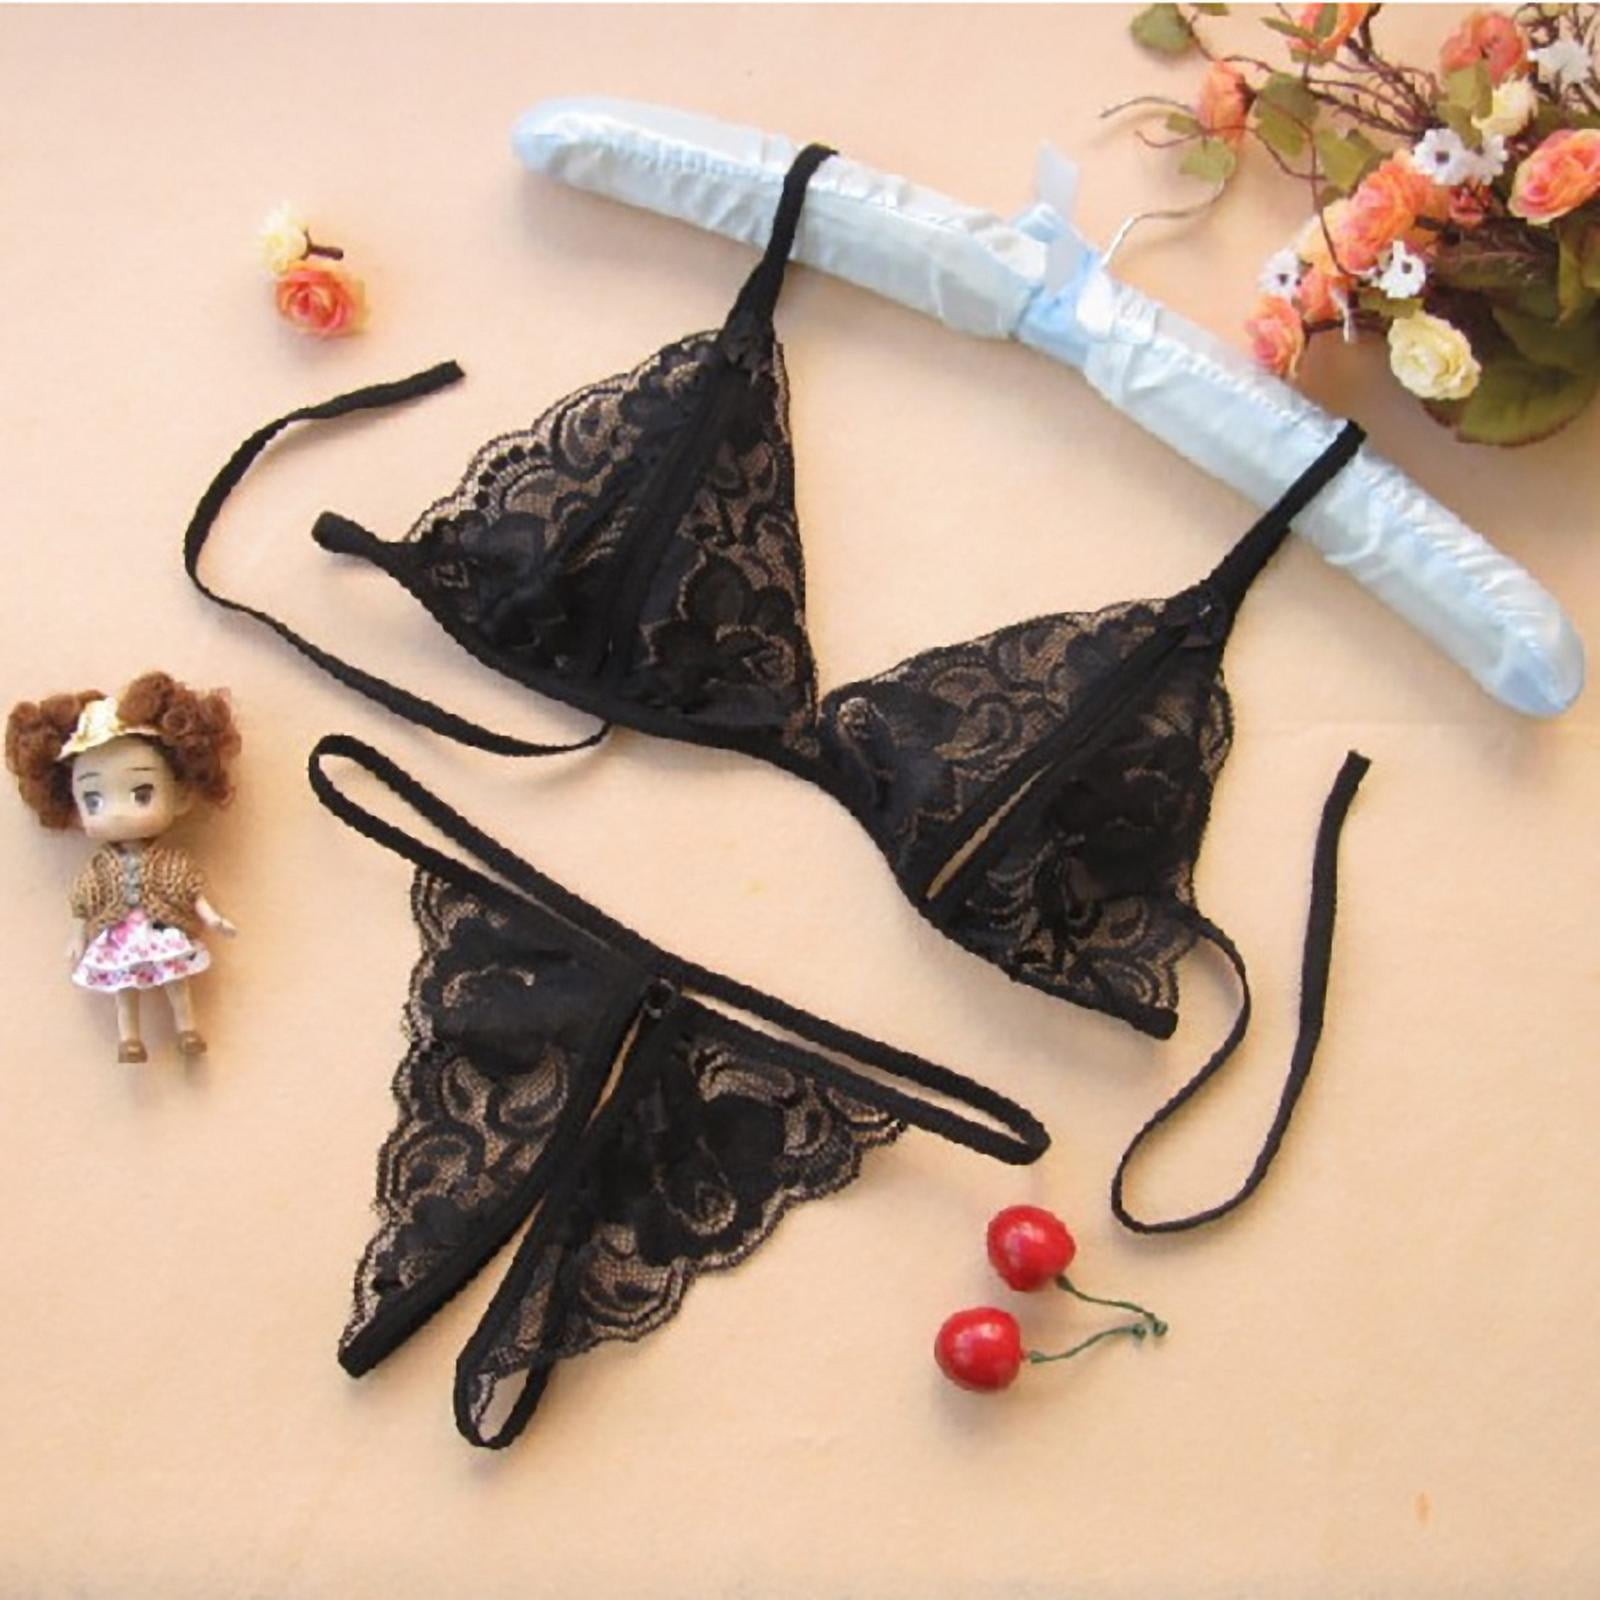 Buy Women Black Cotton Bra Panty Lingerie Set Online  399 from ShopClues